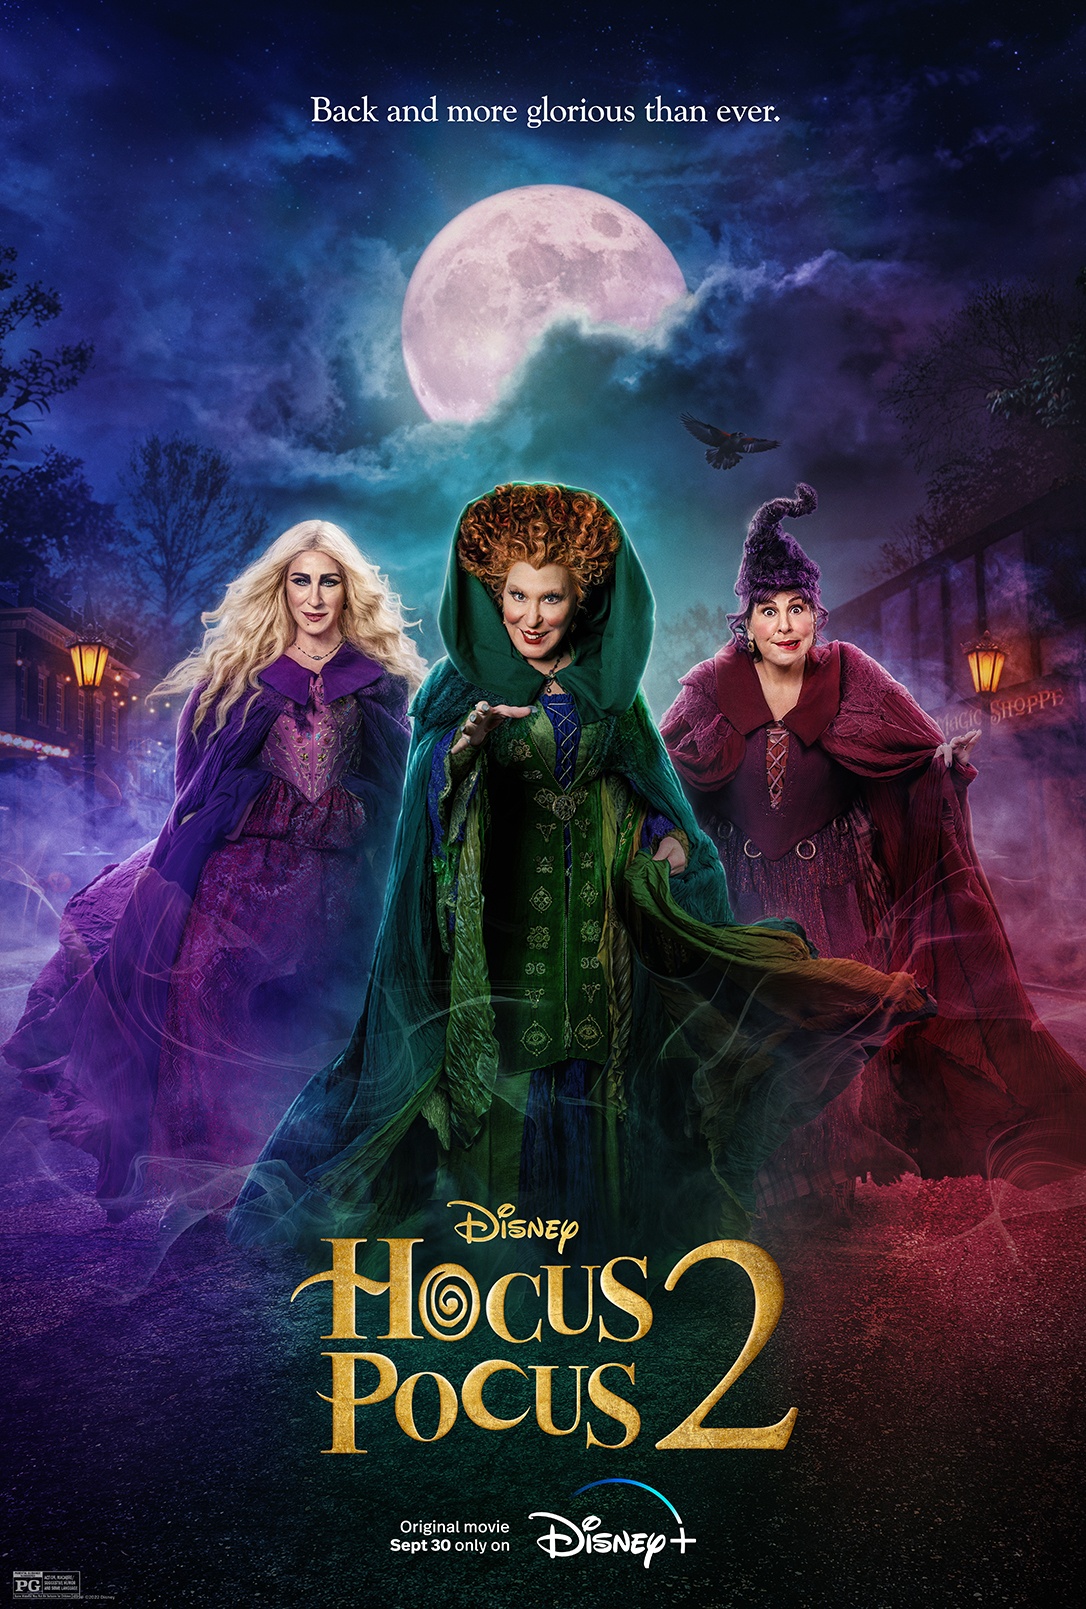 Disney’s Hocus Pocus 2 Debuts In One Month On Disney +